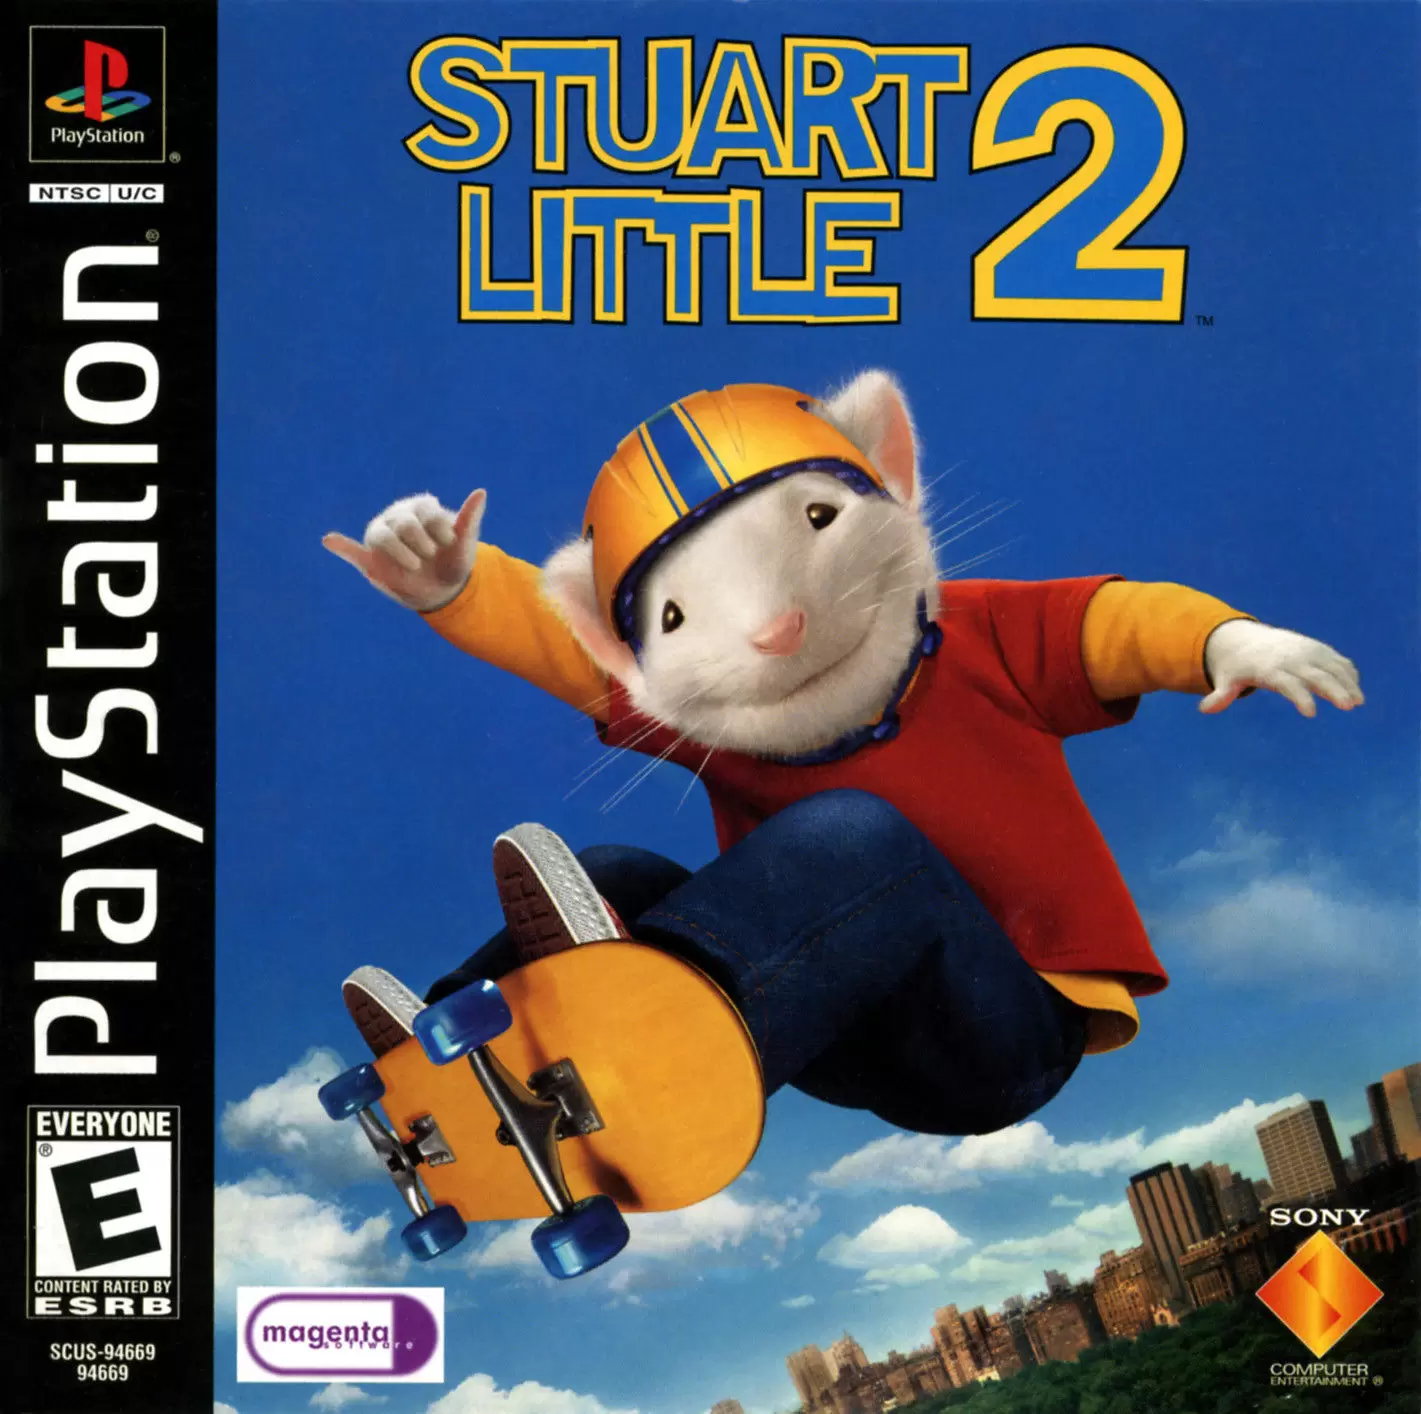 Playstation games - Stuart Little 2